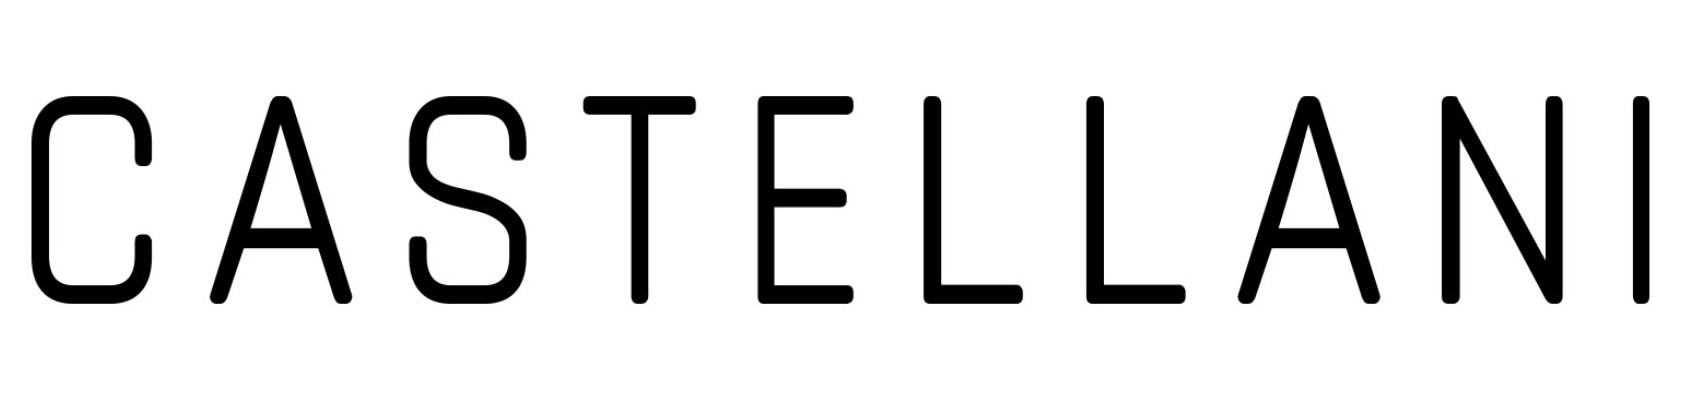 Castellani_Logo_new.jpg